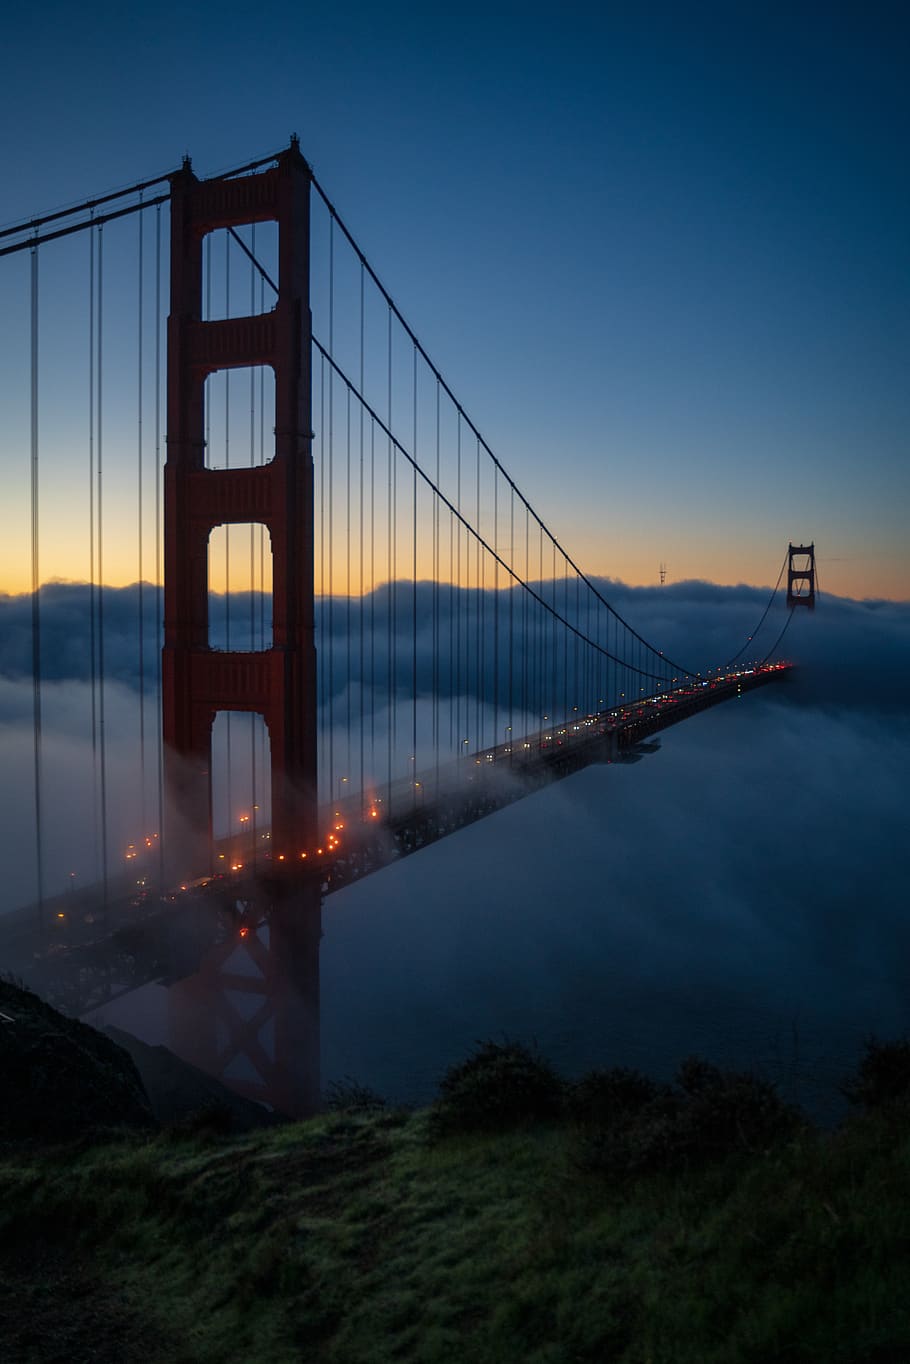 HD wallpaper: Golden Gate bridge at nighttime, building, suspension bridge  | Wallpaper Flare